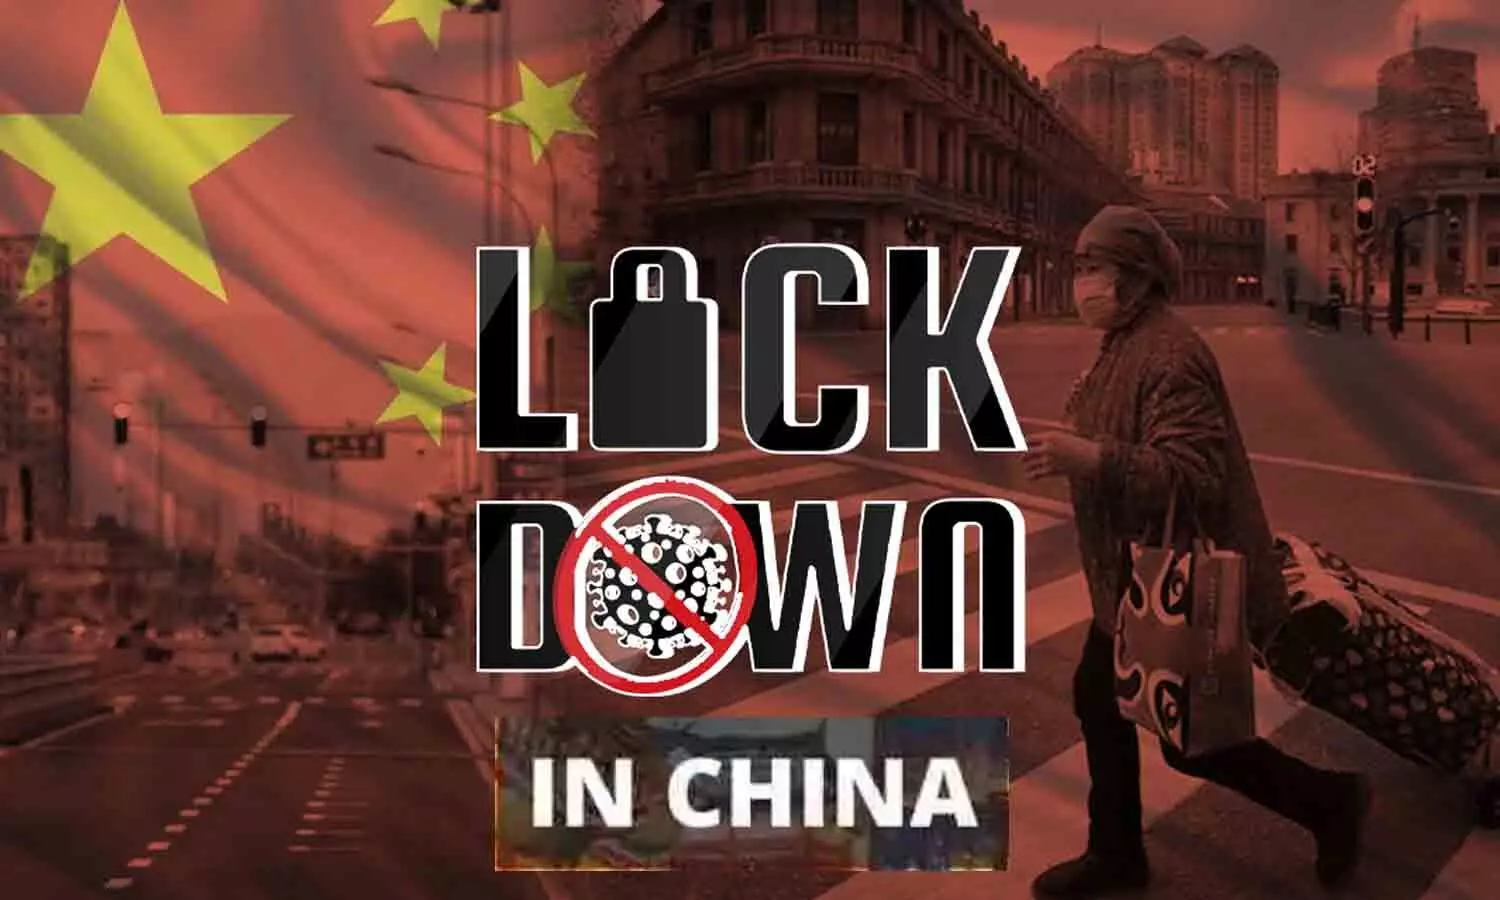 Corona Lockdown: Corona lockdown imposed in Shenzhen city of China, 17 million people imprisoned in homes